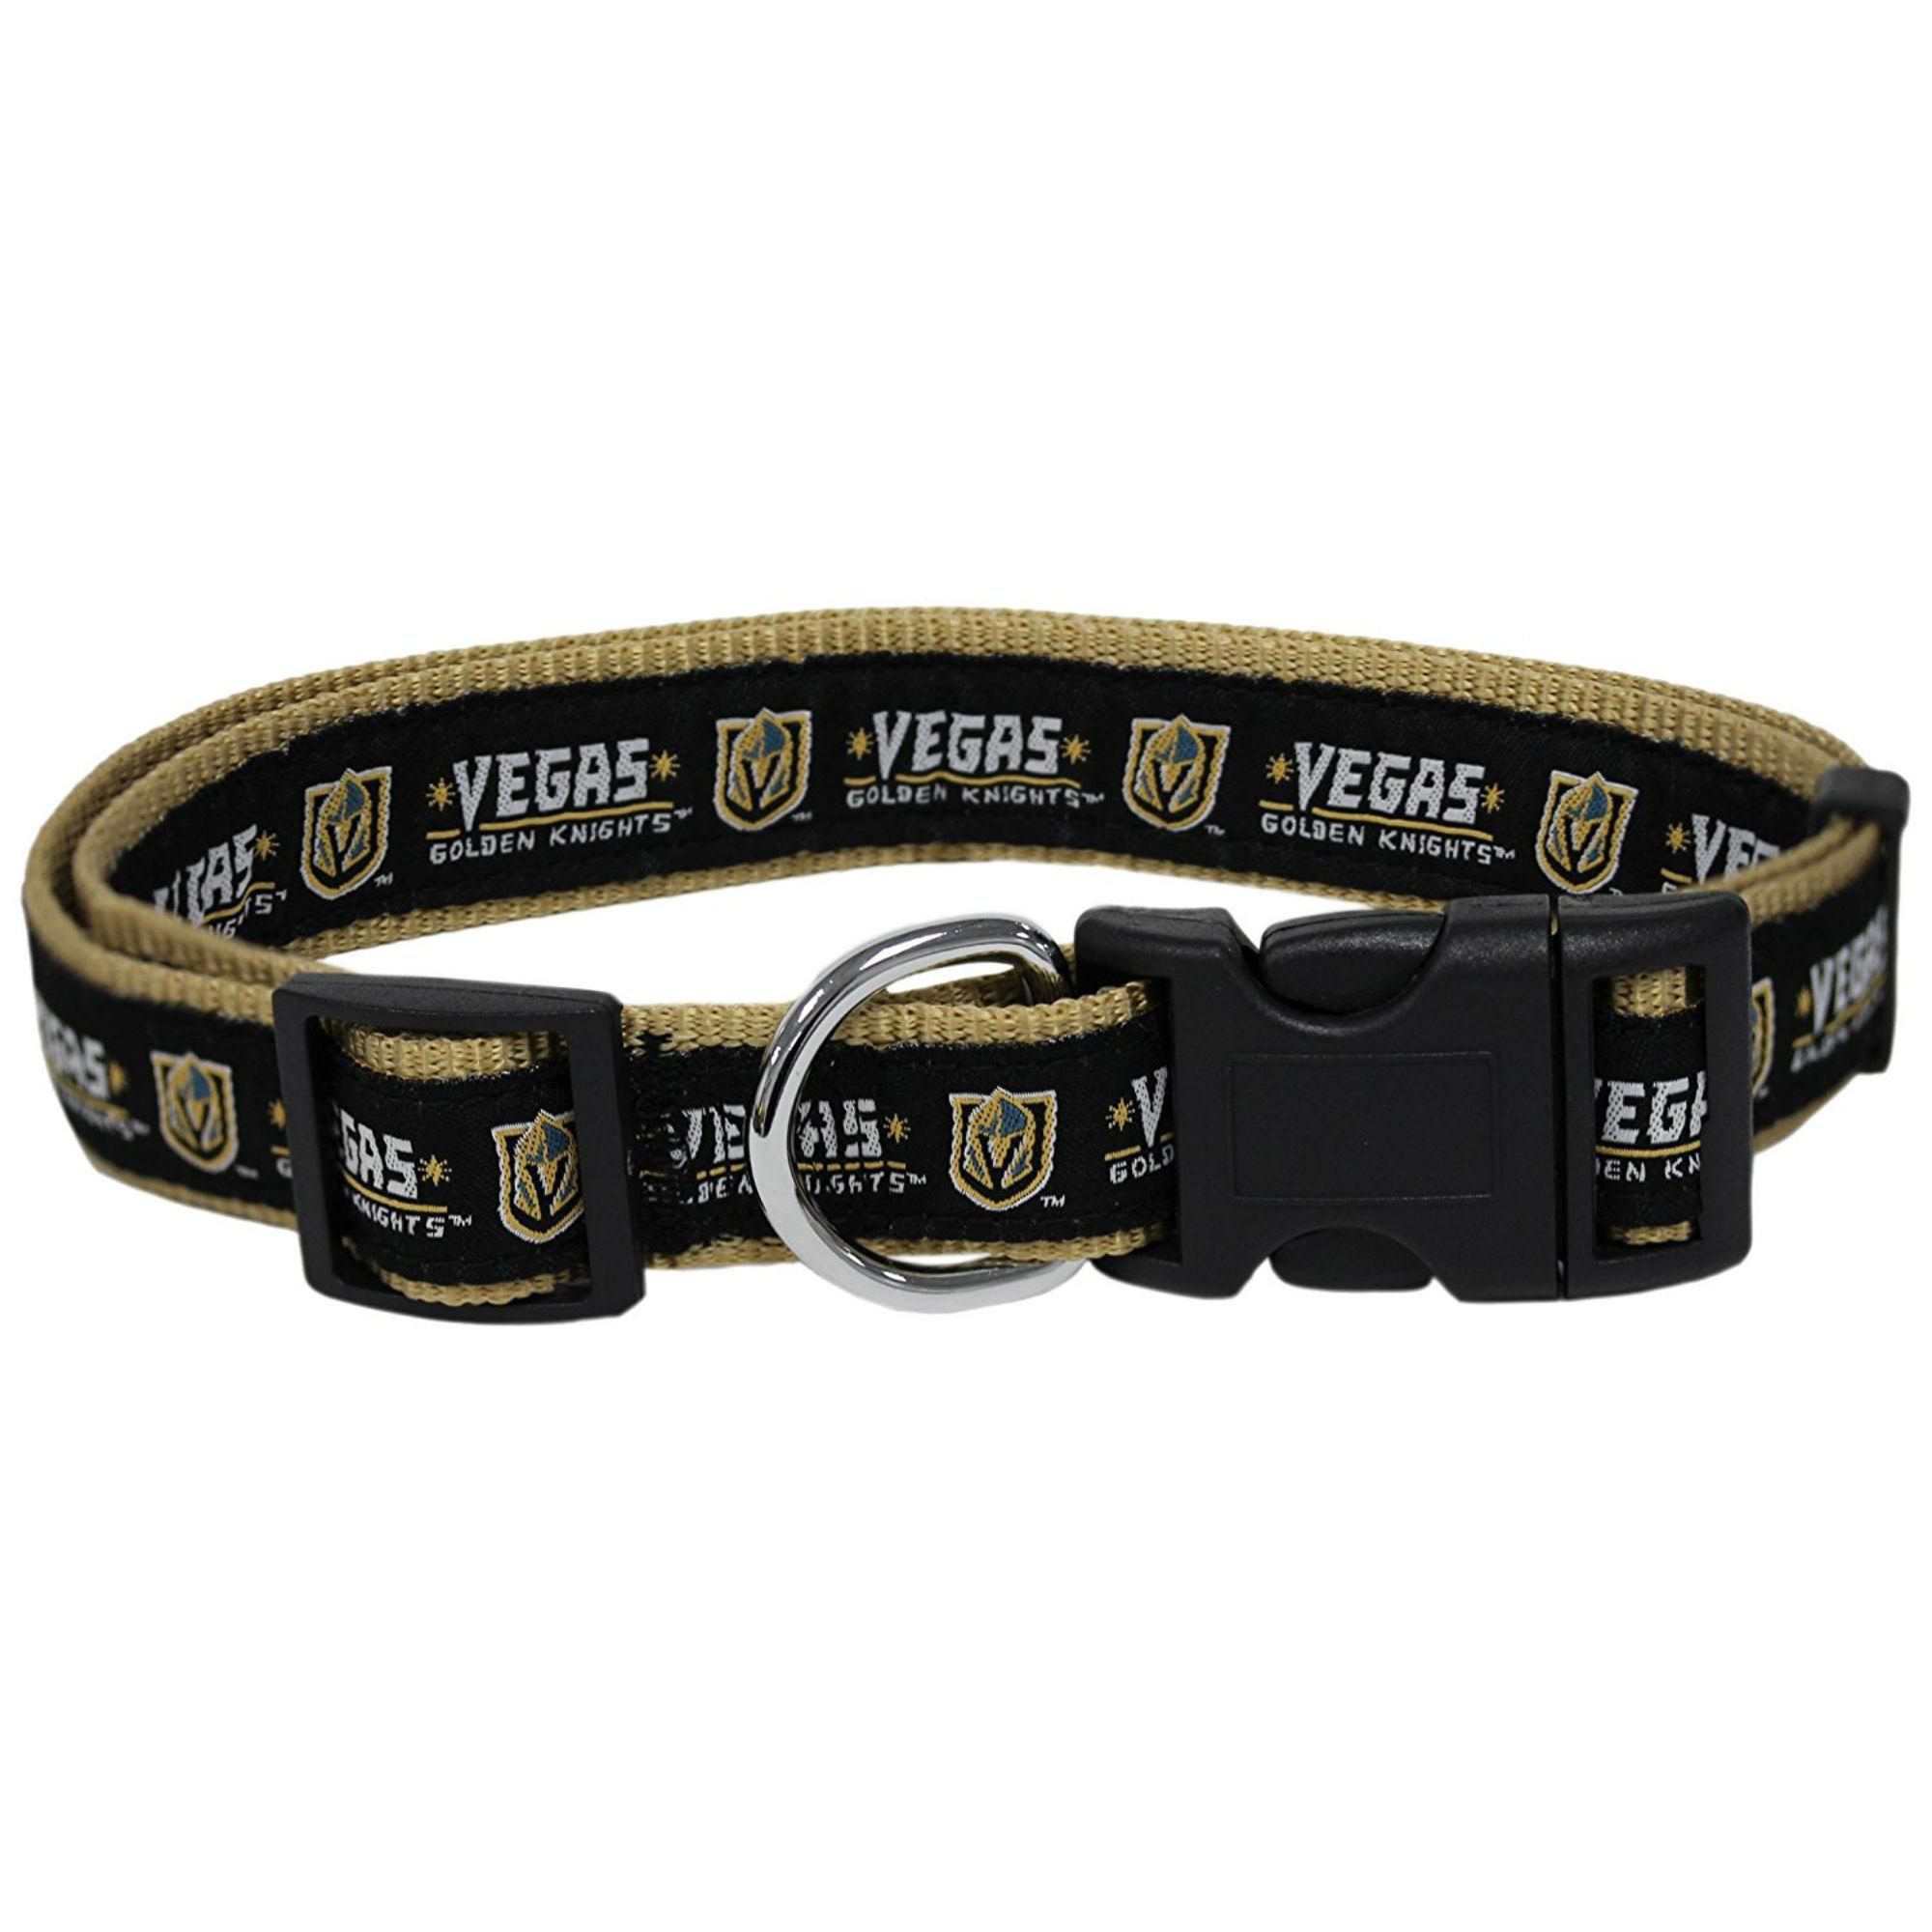 Las Vegas Golden Knights Officially Licensed Dog Collar